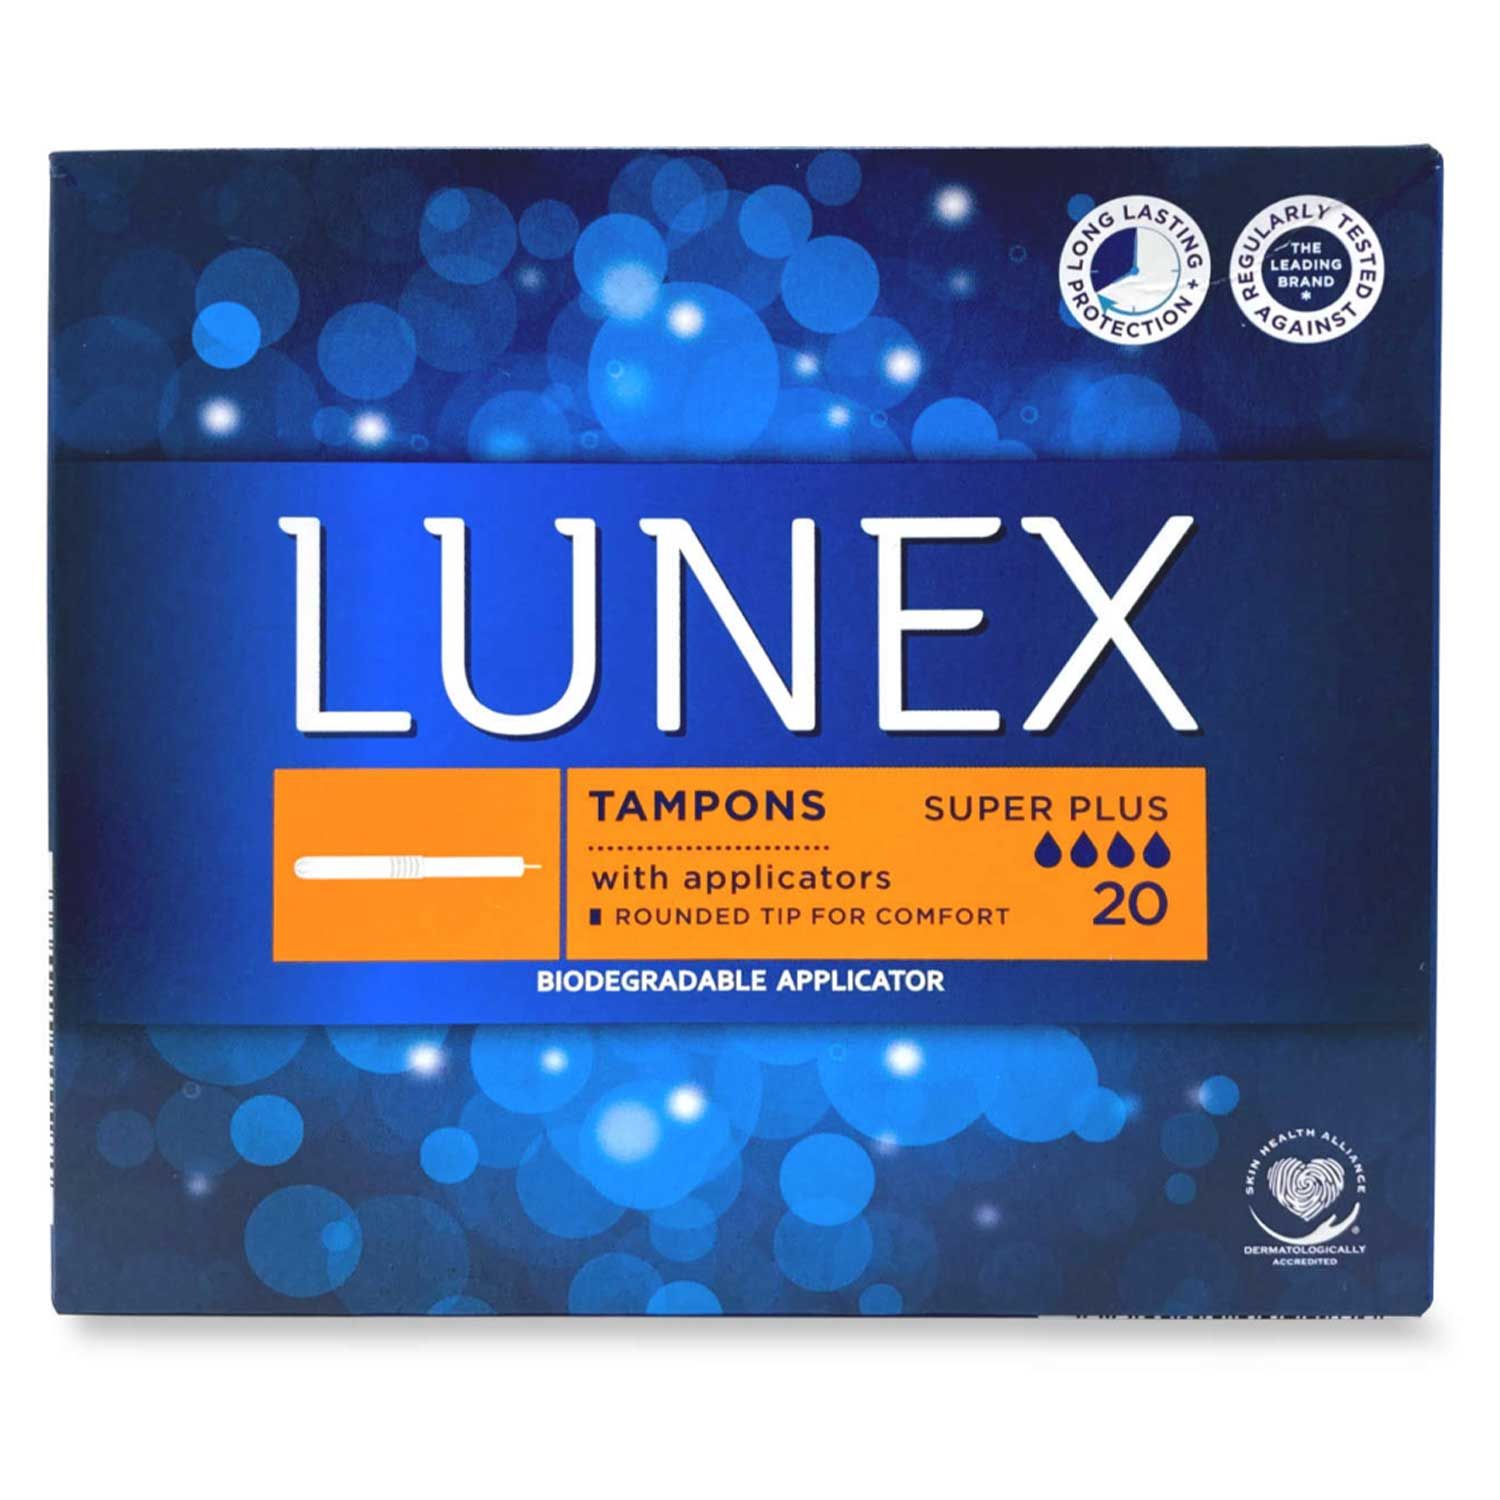 Lunex Tampons With Applicators - Super Plus 20 Pack